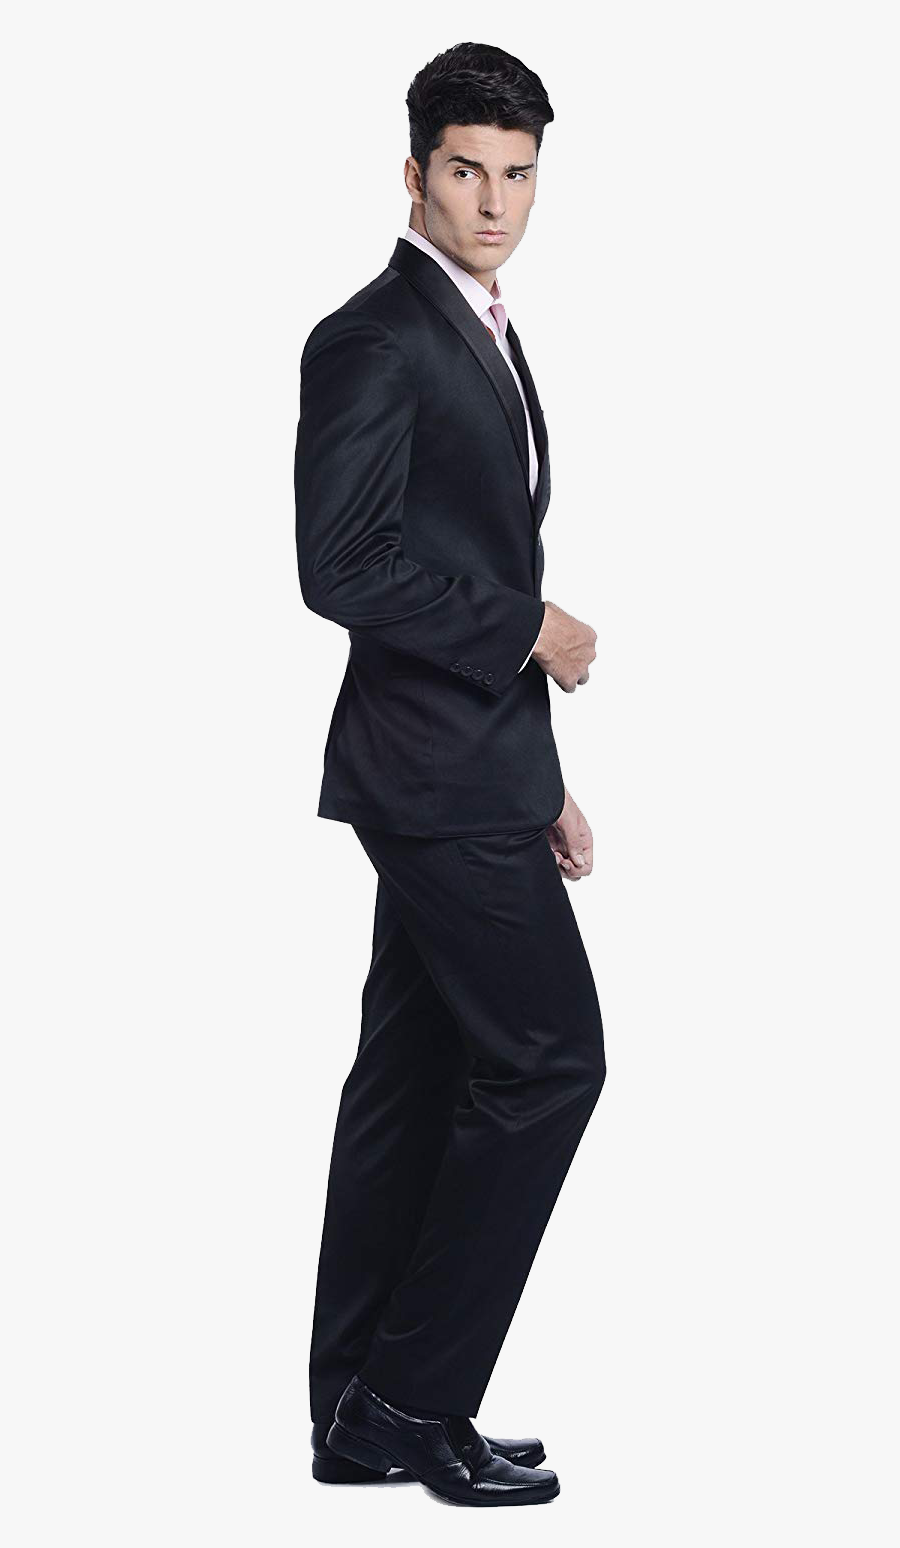 Black Tuxedo Free Desktop Background - Tuxedo, Transparent Clipart